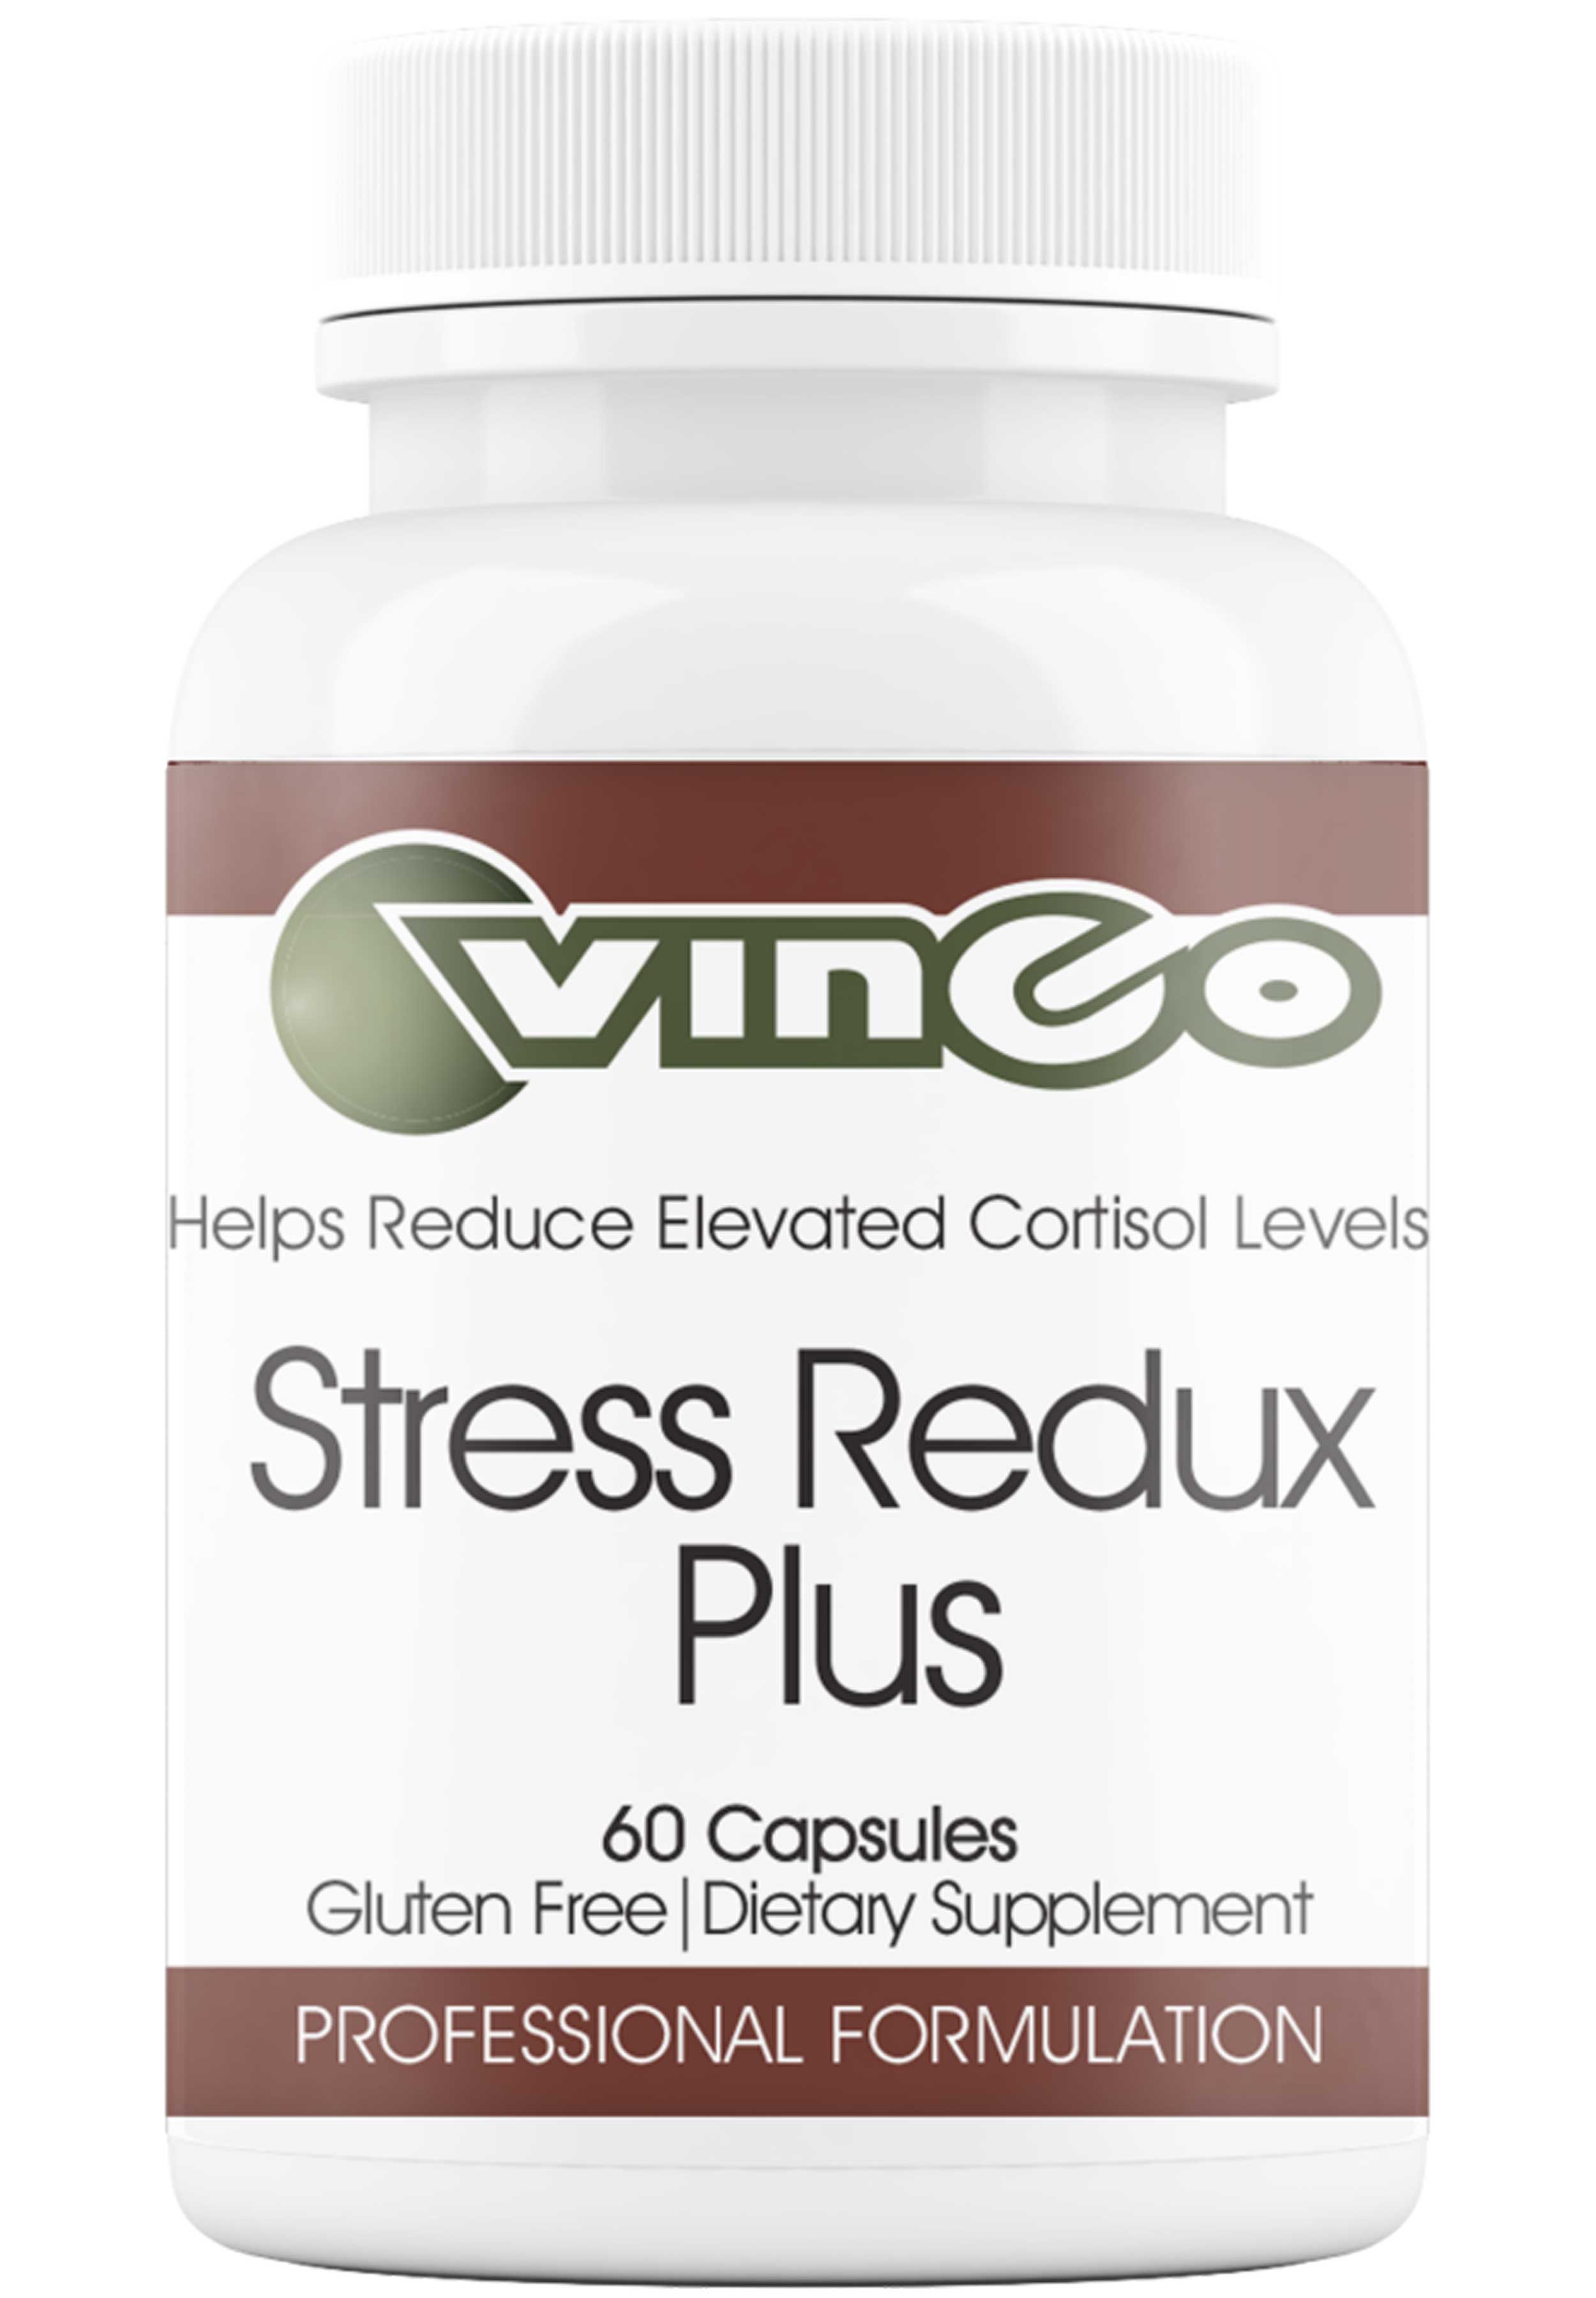 Vinco Stress Redux Plus